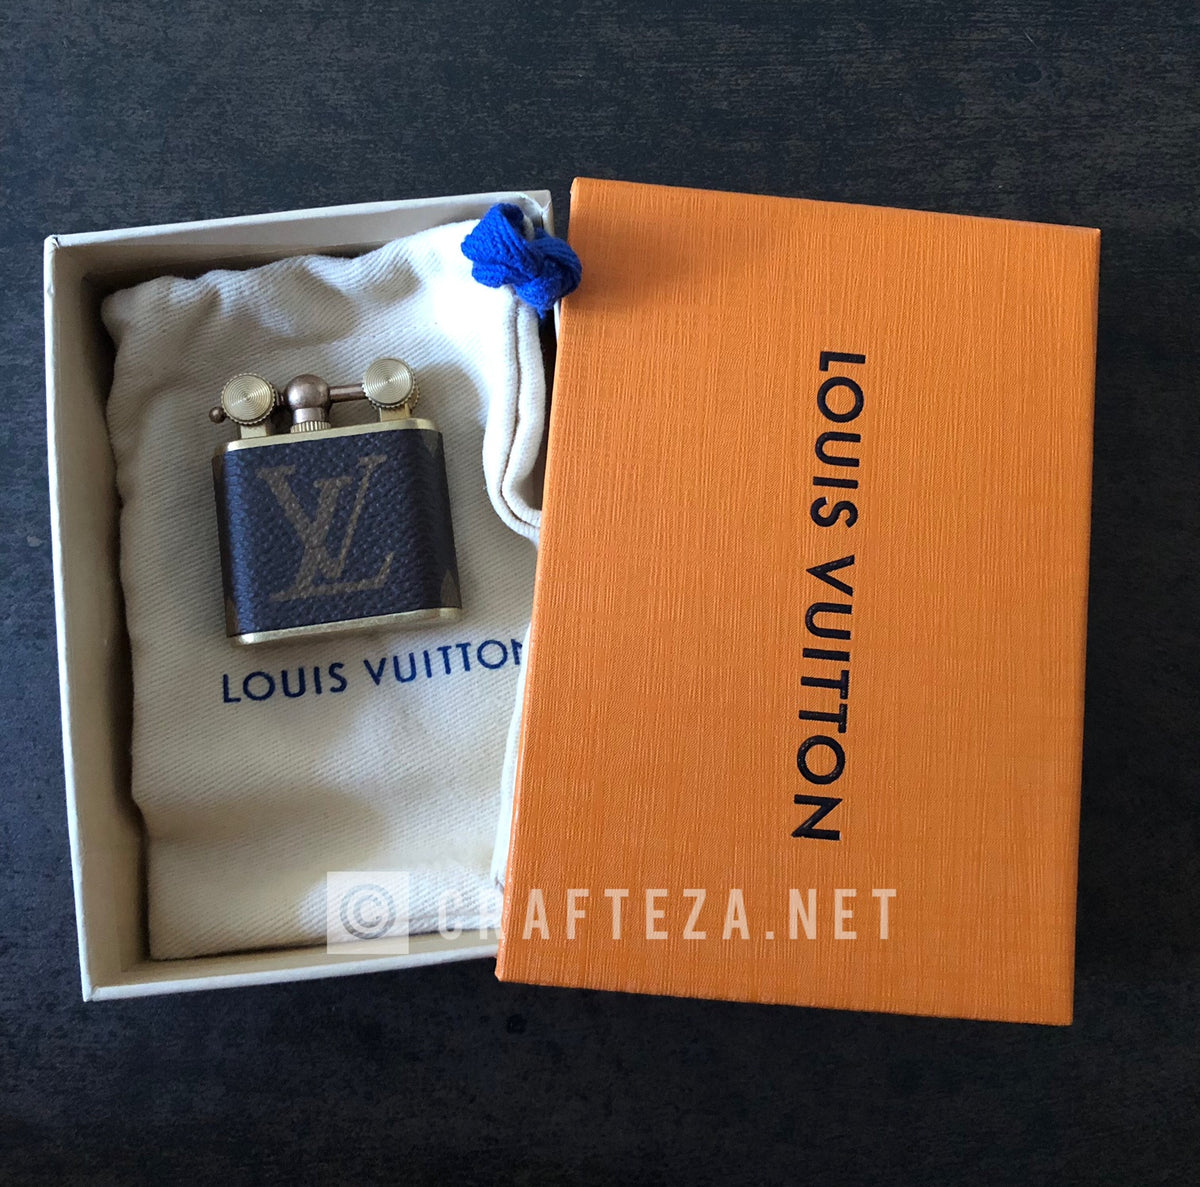 Louis Vuitton vintage lighter – Crafteza